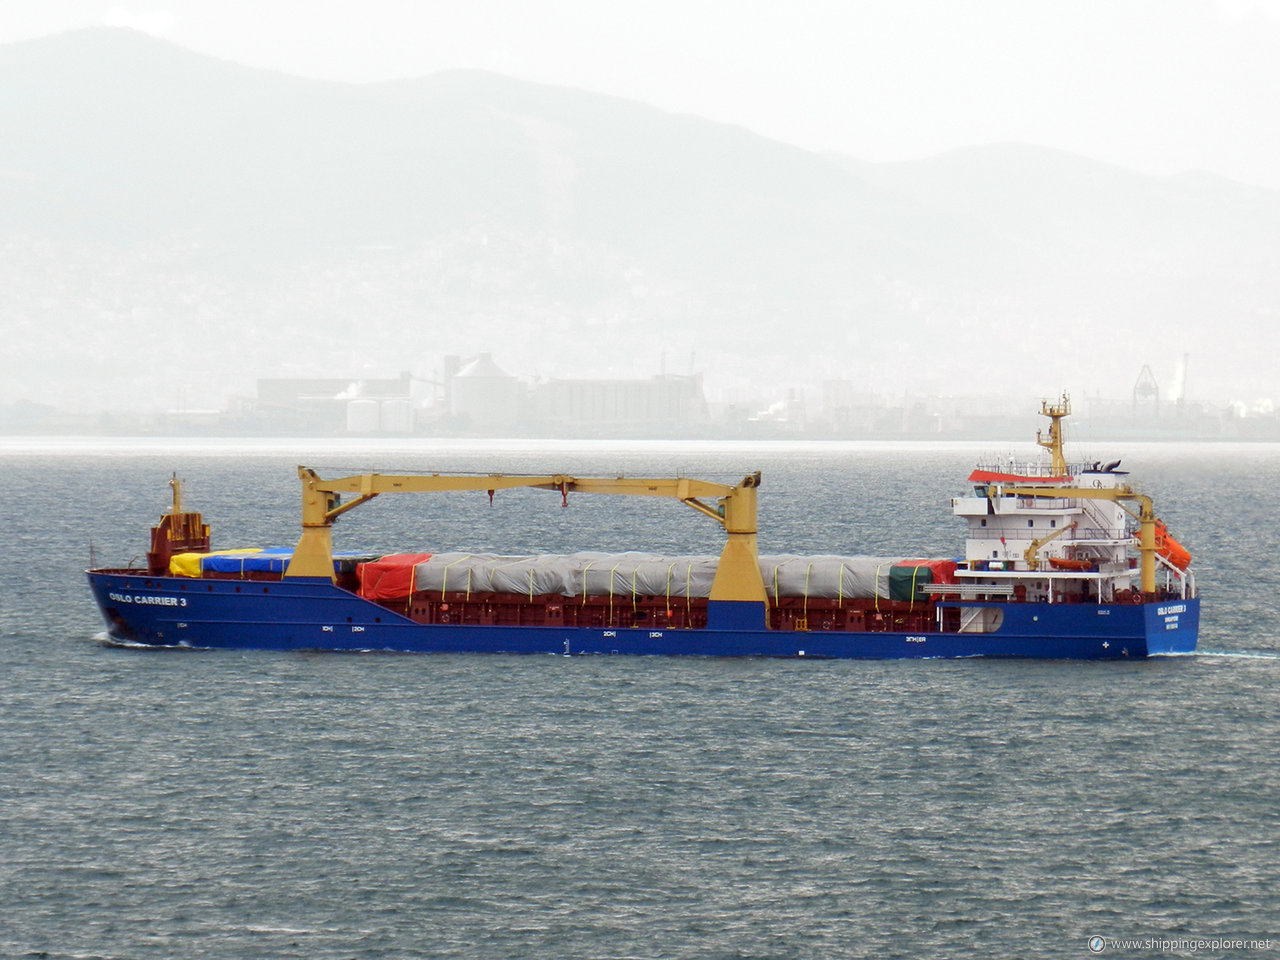 Oslo Carrier 3